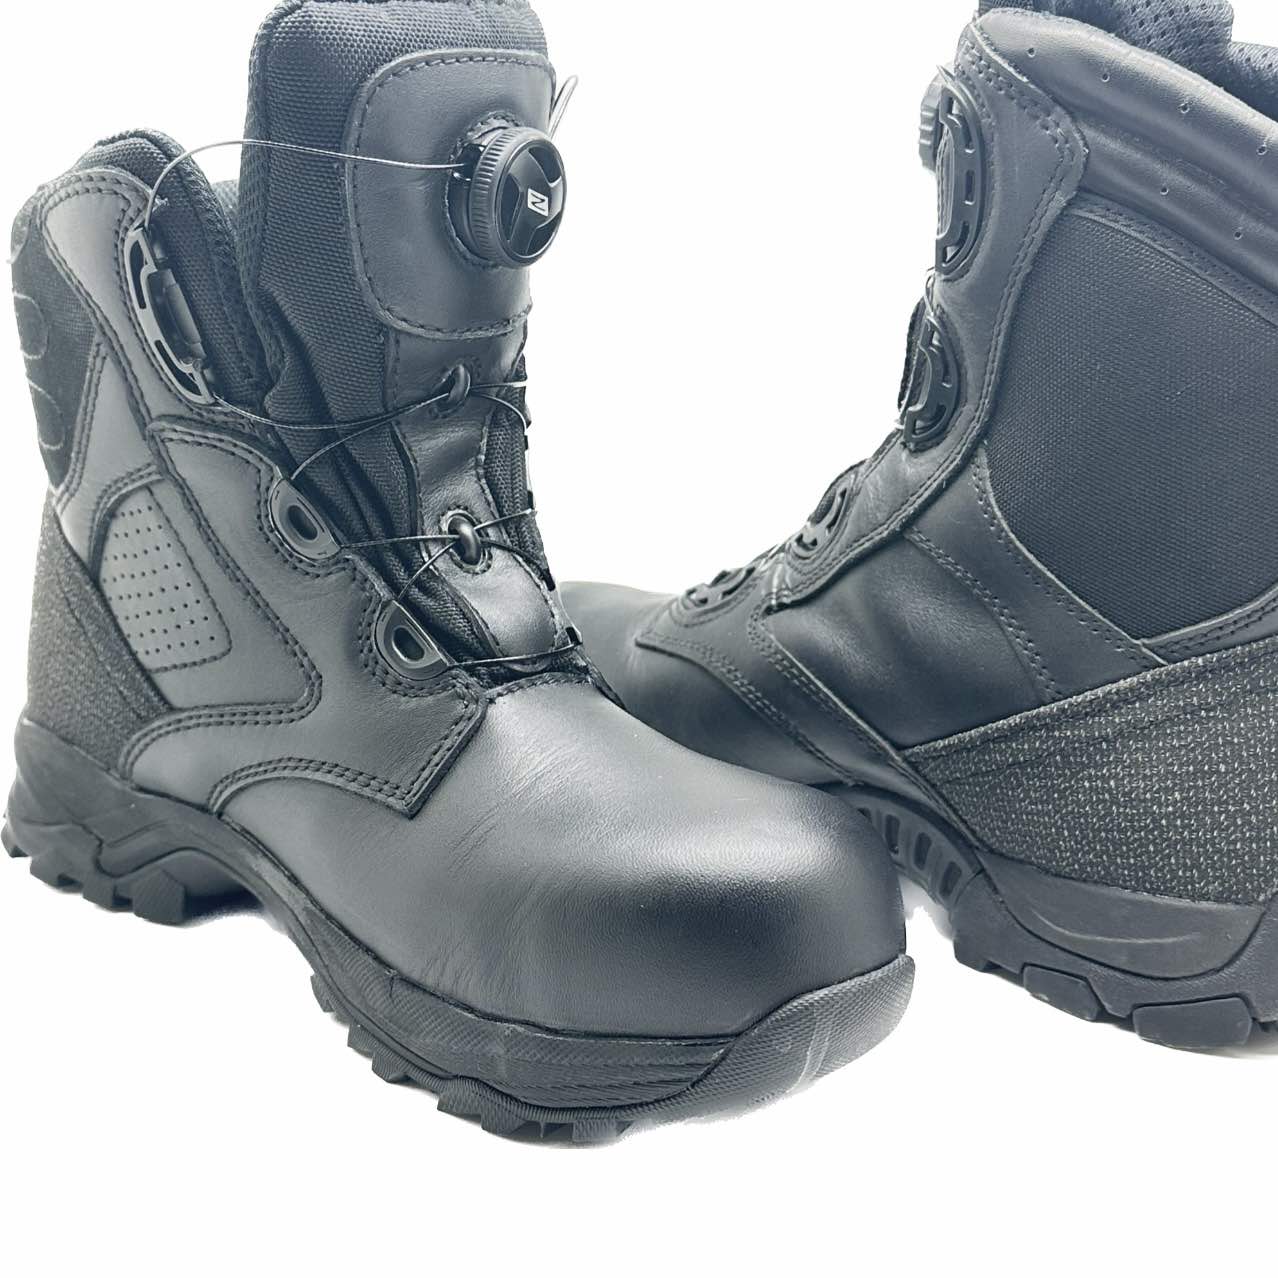 Waterproof full grain leather black Tactical Combat Boots